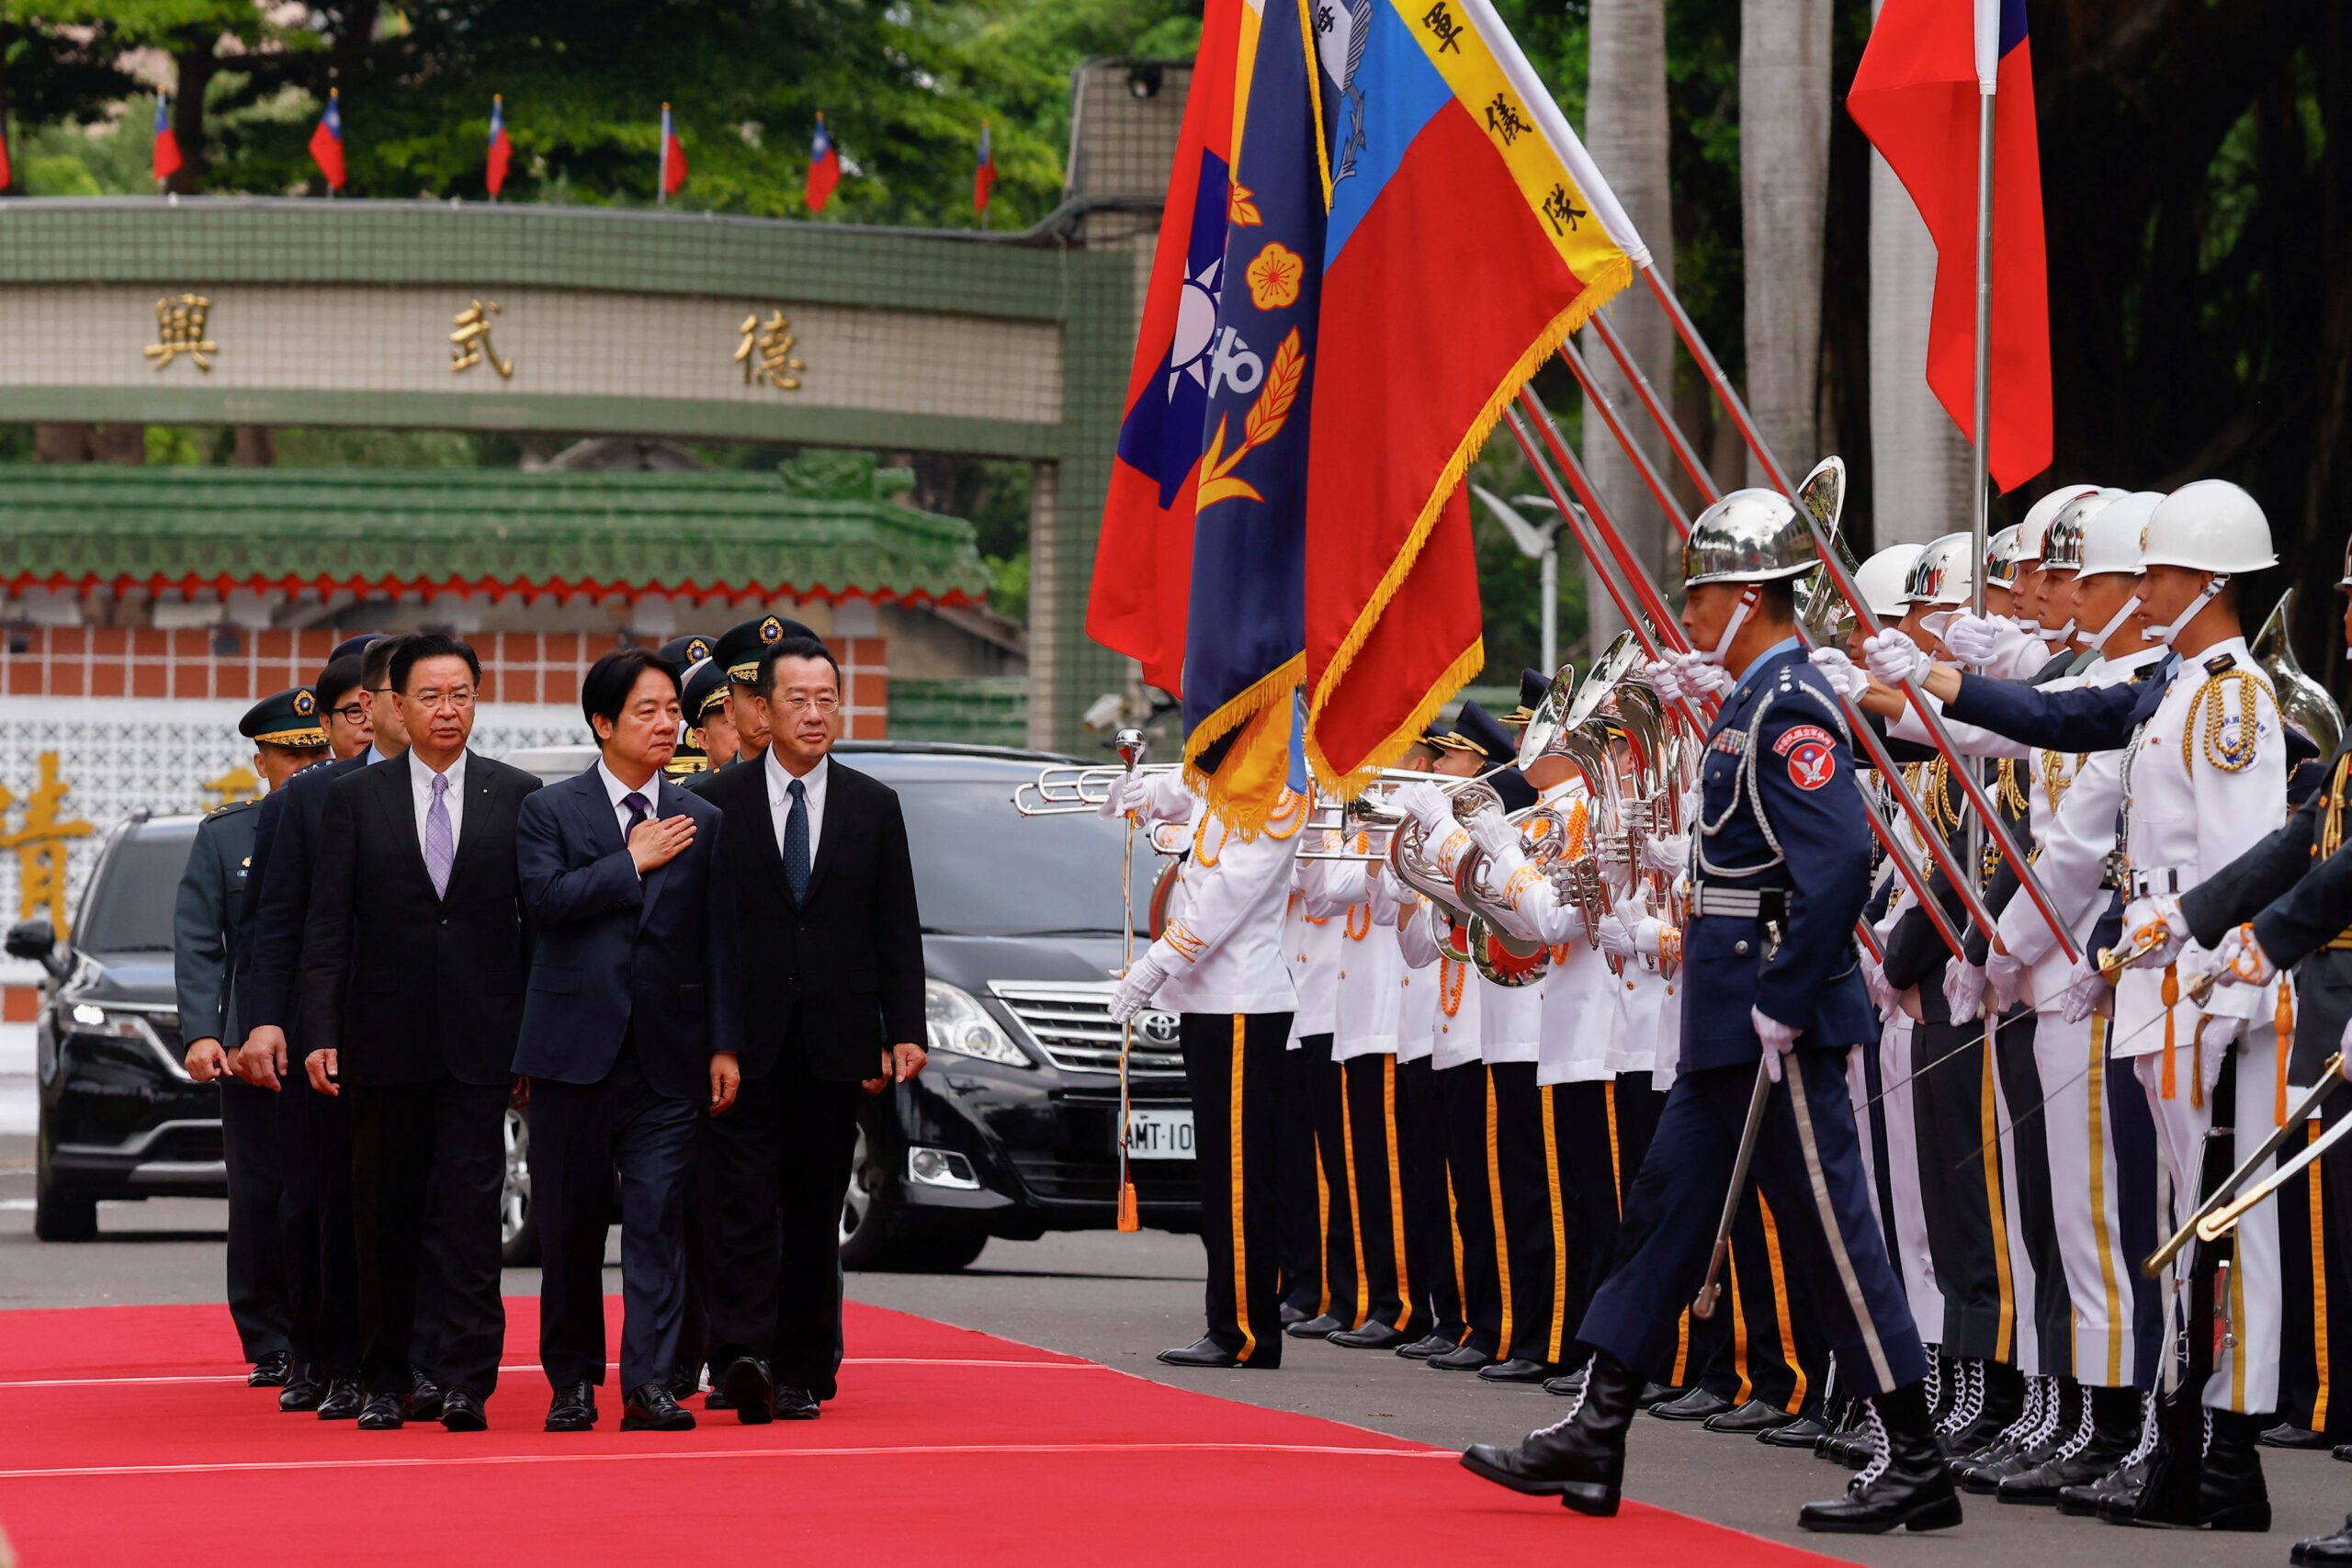 China views Taiwan’s ‘elimination’ as national cause, Taiwan president says